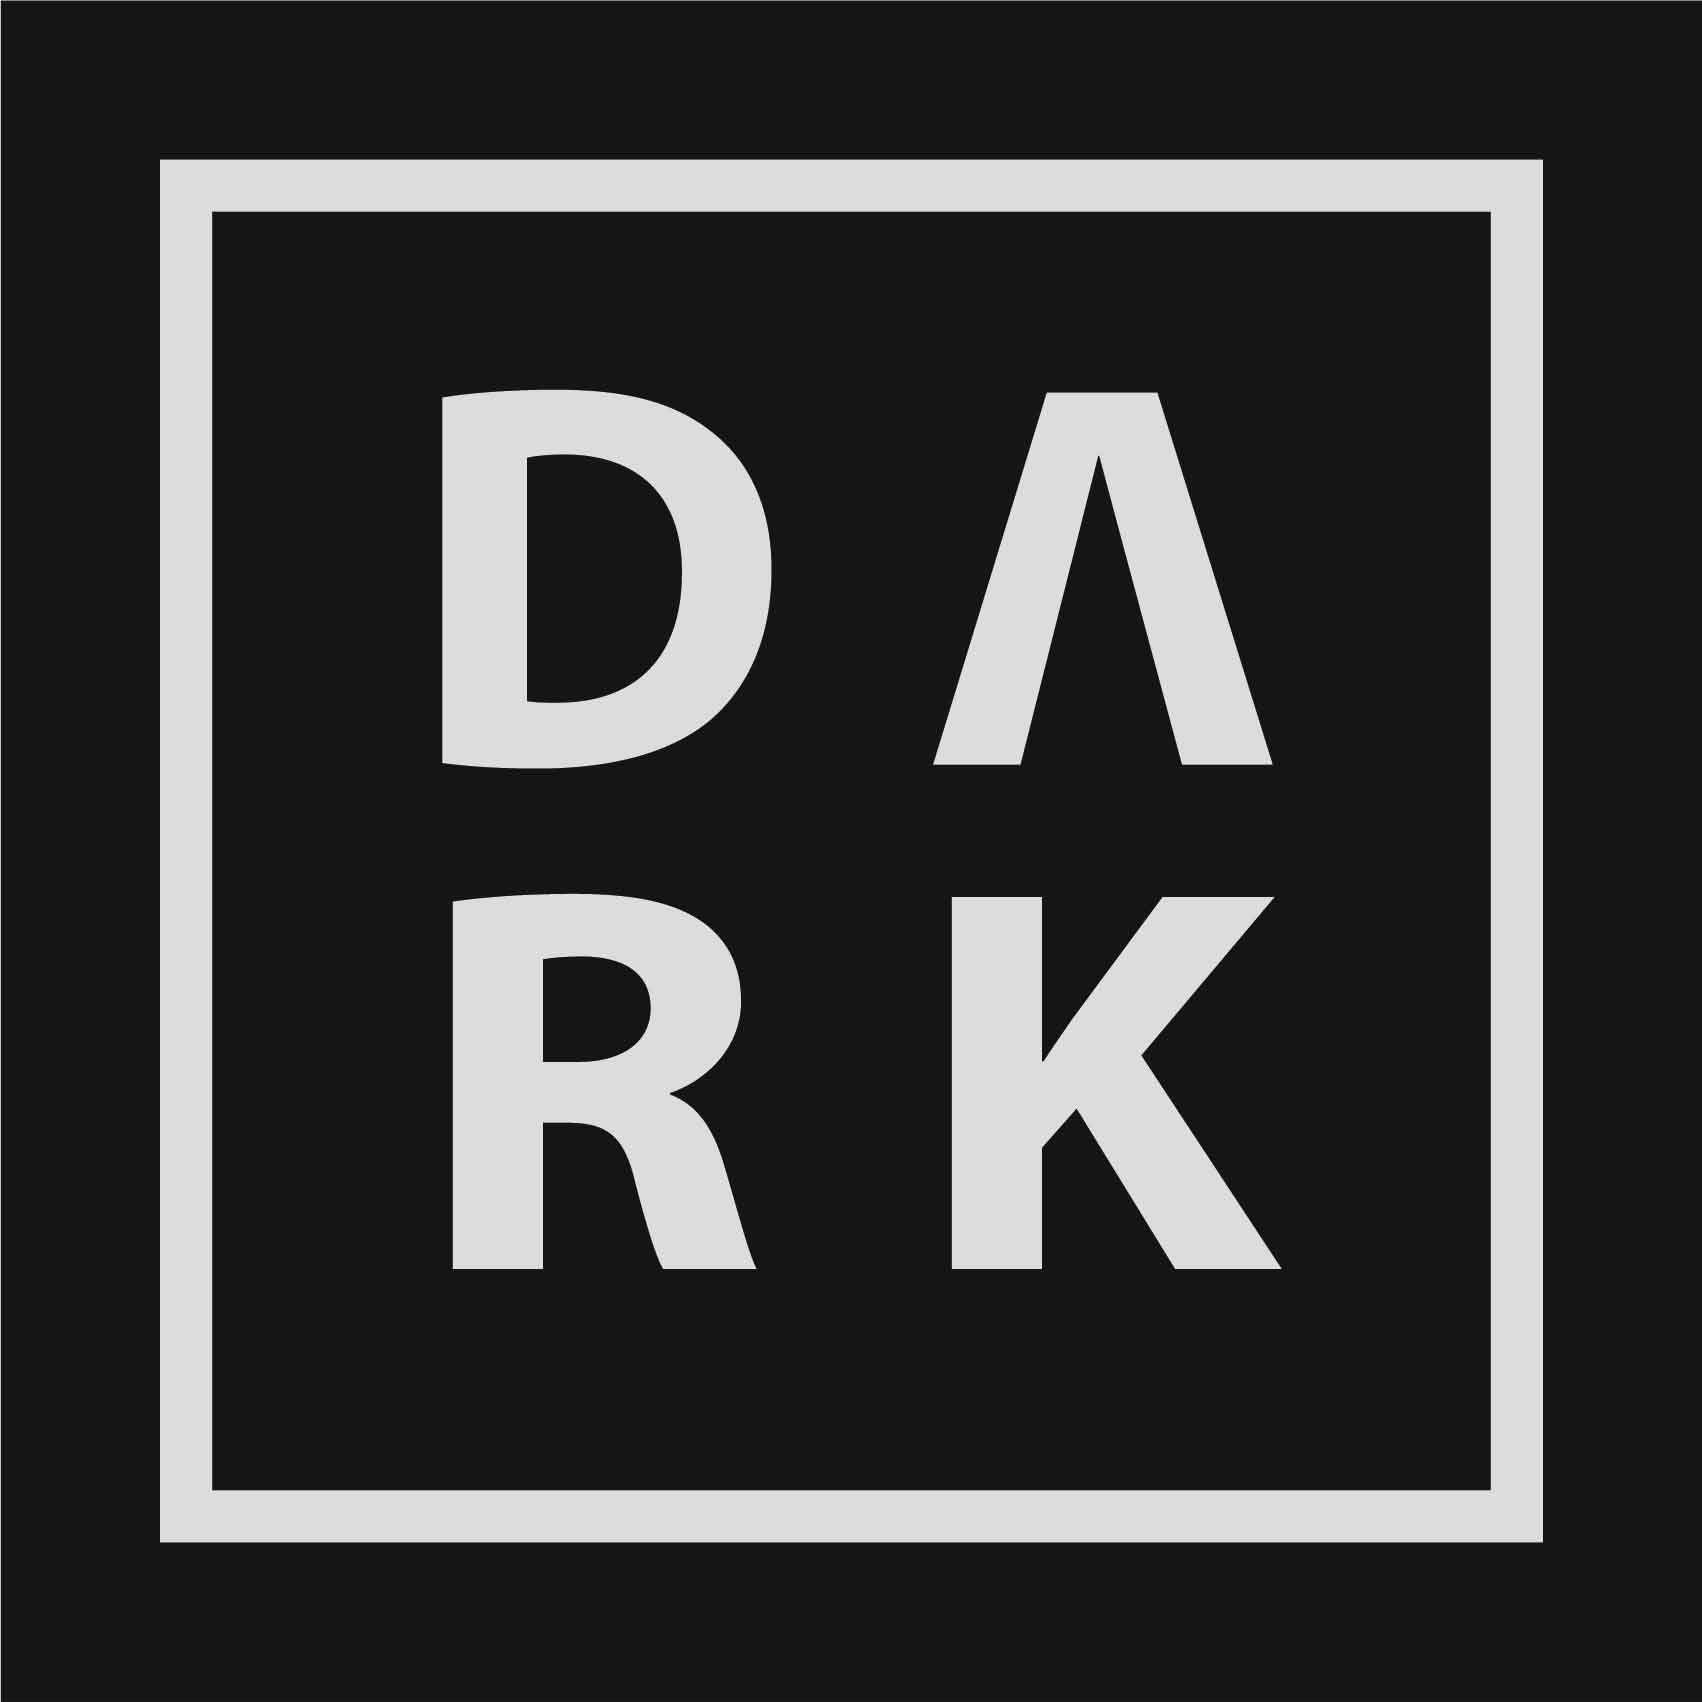 DARK Reactr Tshirts For Men - Eyewearlabs